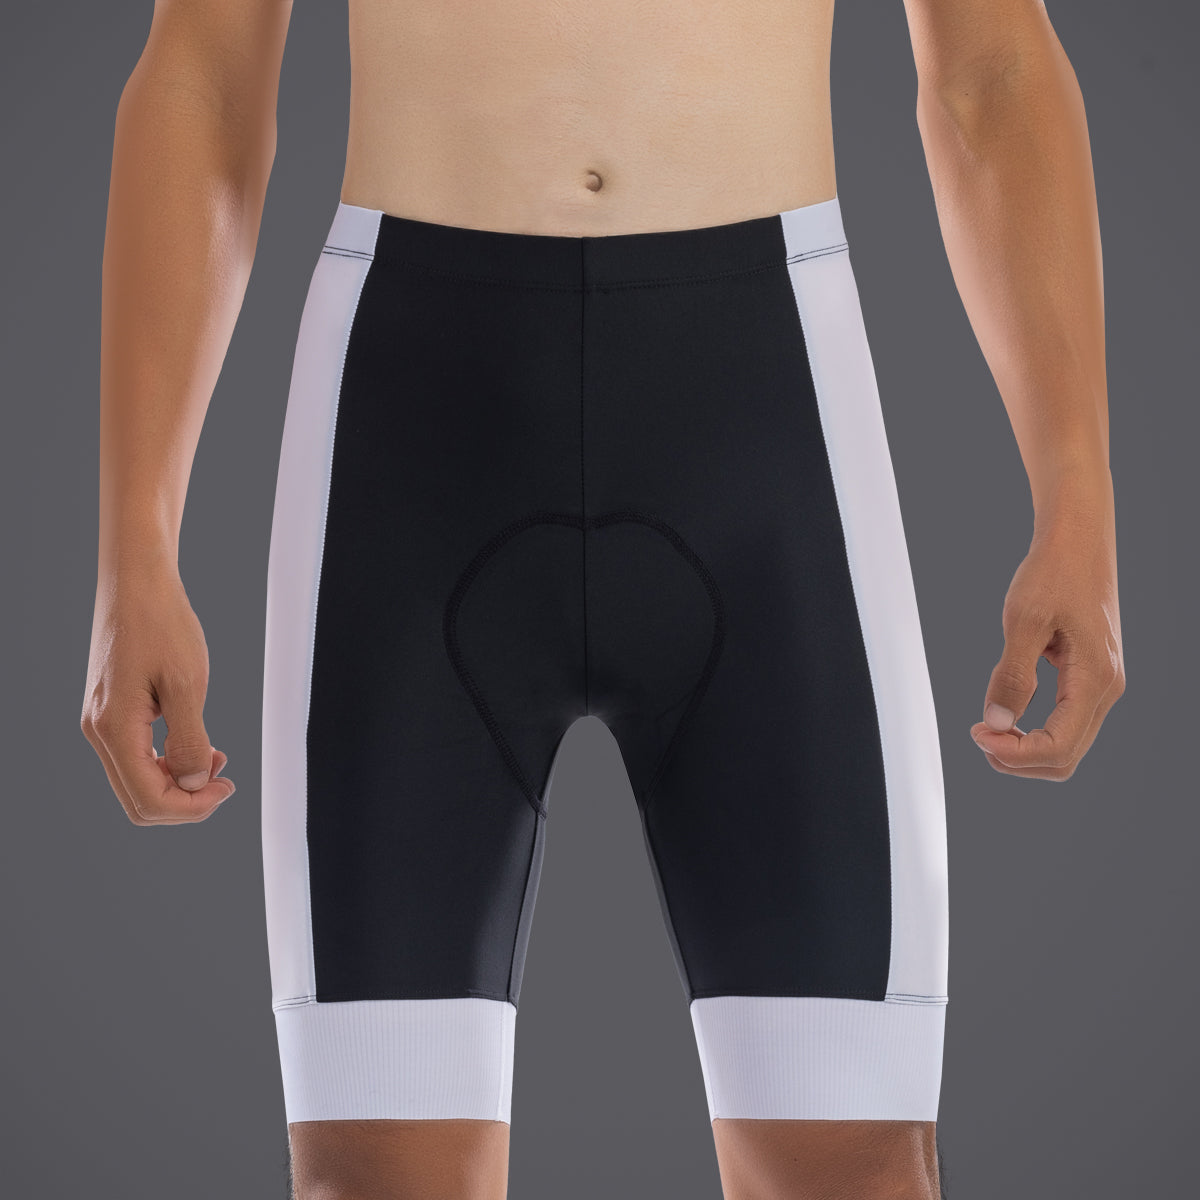 Men's Cycling Shorts